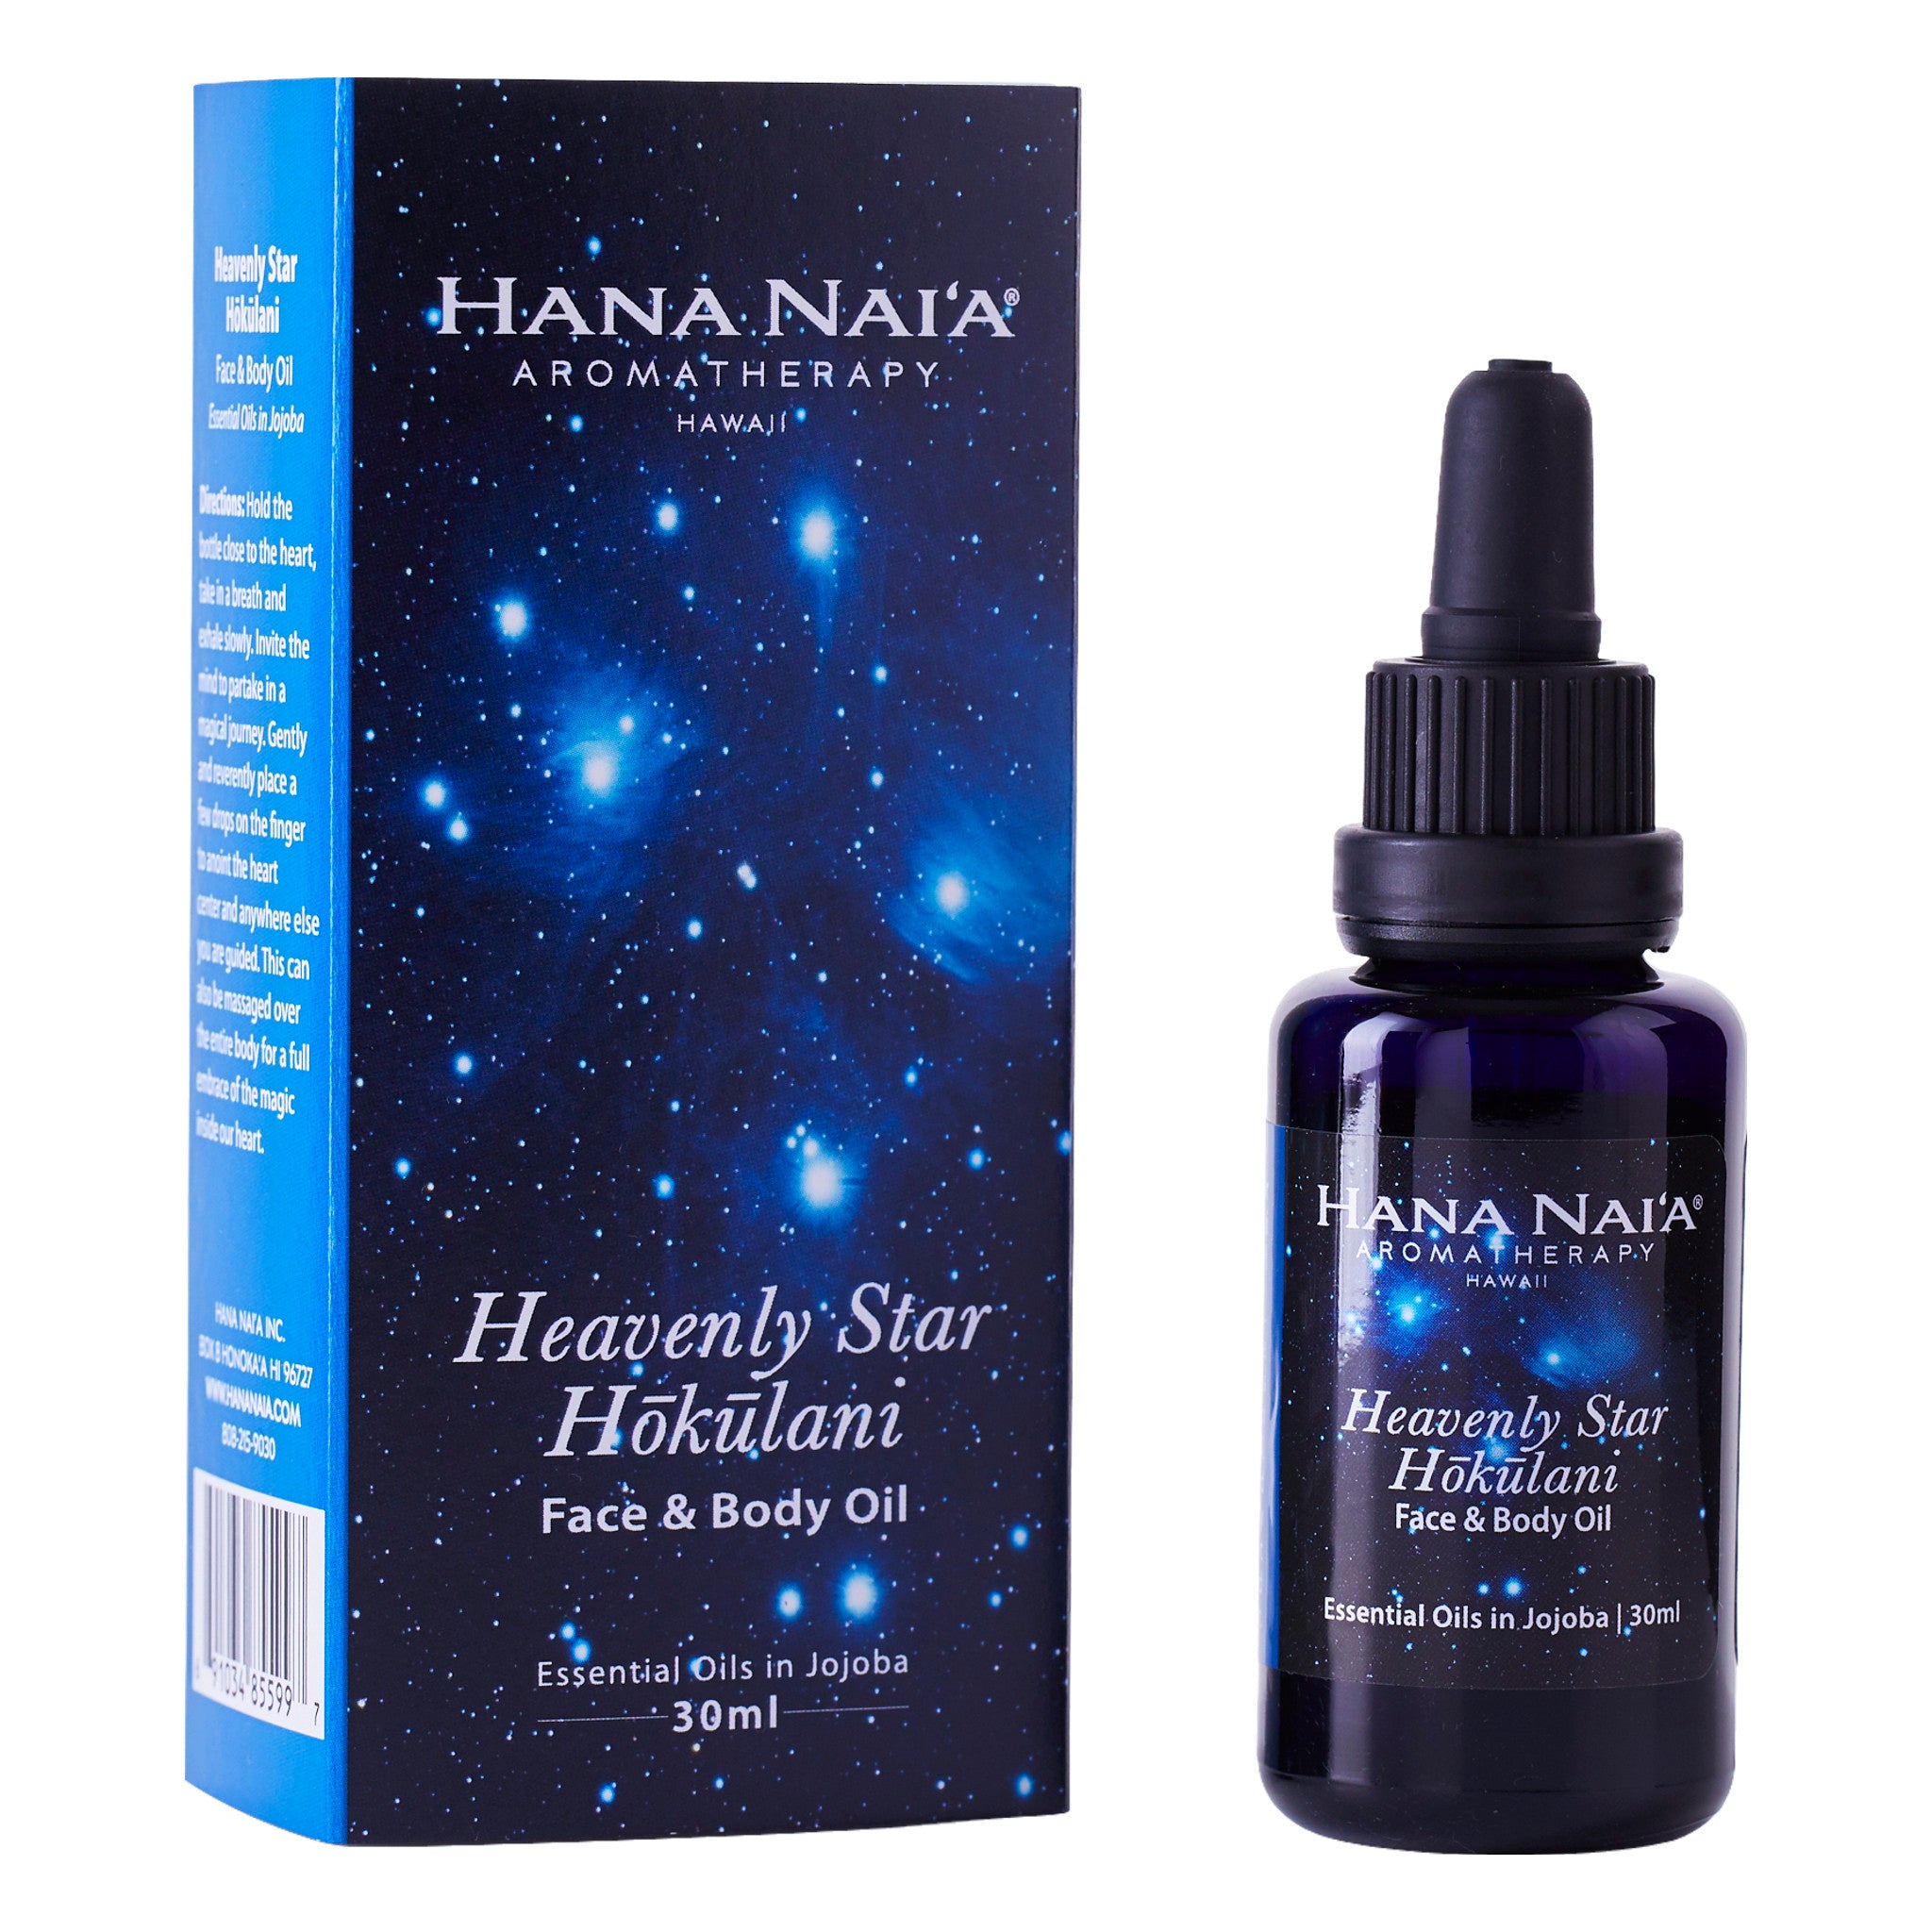 Heavenly Star Hokulani Face & Body Oil